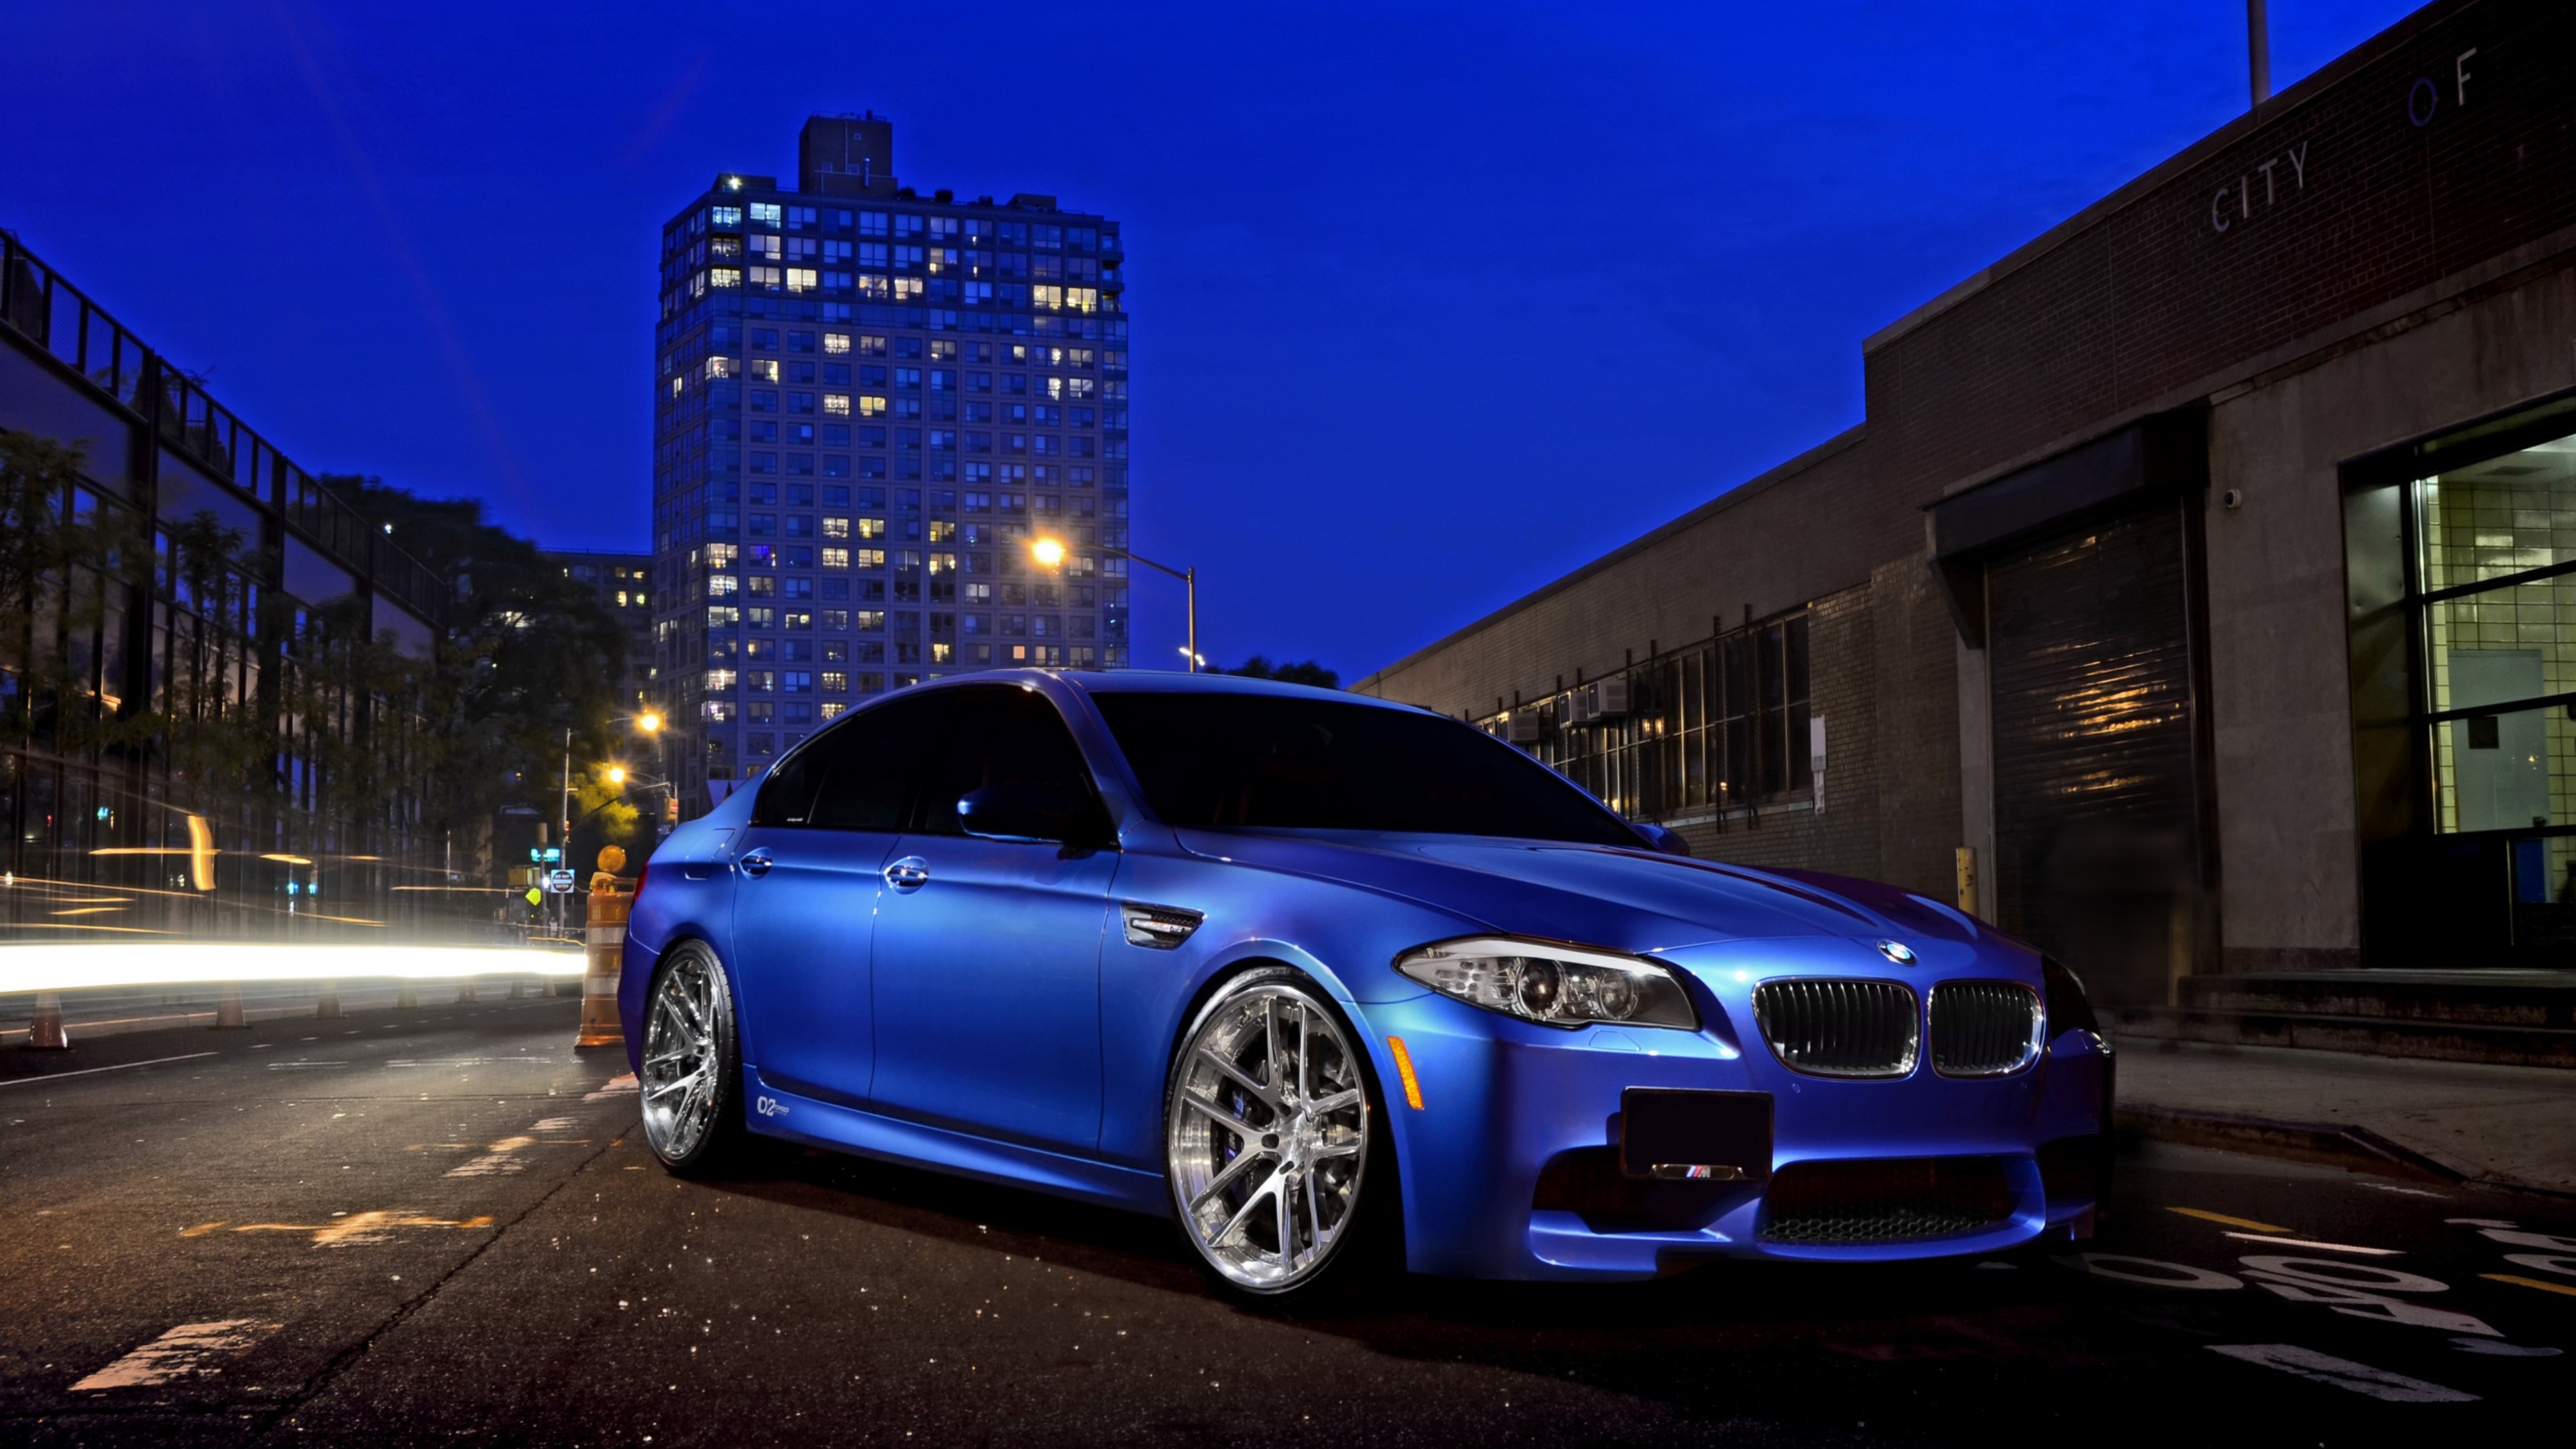 М5 ночью. BMW m5 f10 Blue. BMW m5 f10 Night. BMW m5 f10 синяя. BMW m5 неон.